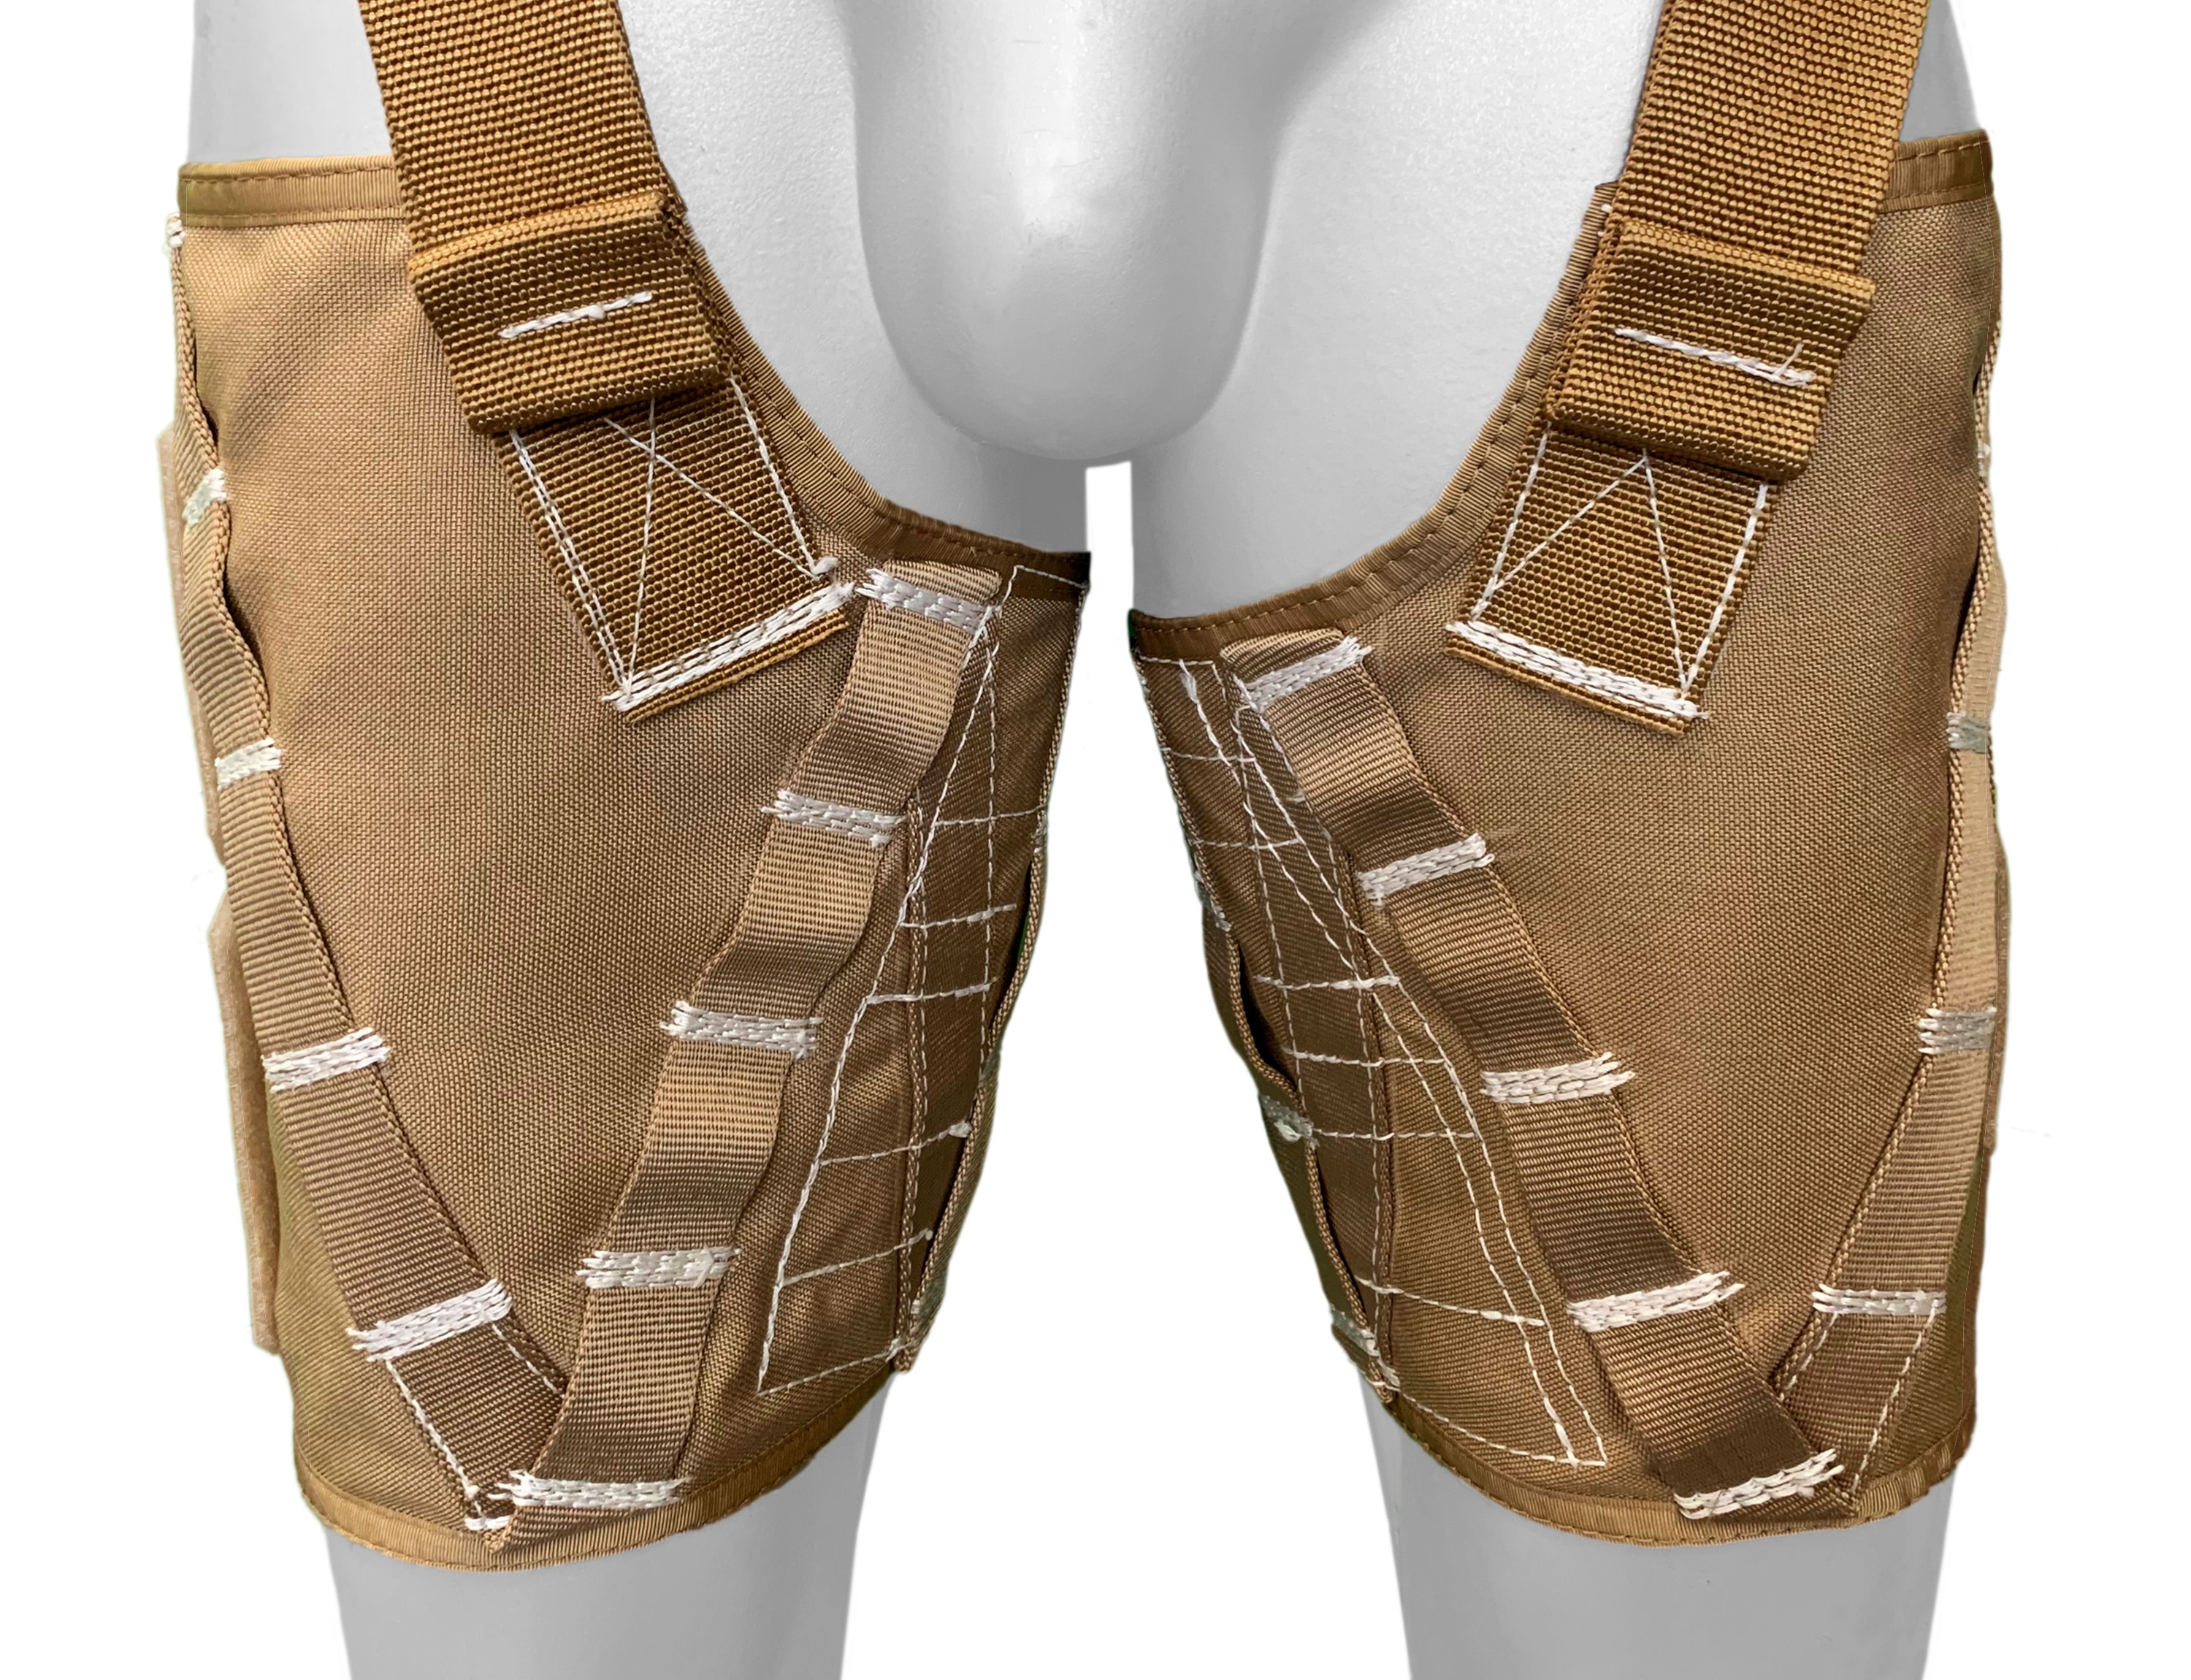 https://tracers.ru/wp-content/uploads/2017/04/Leg-cuffs-harness-shorts-tan-front.jpg